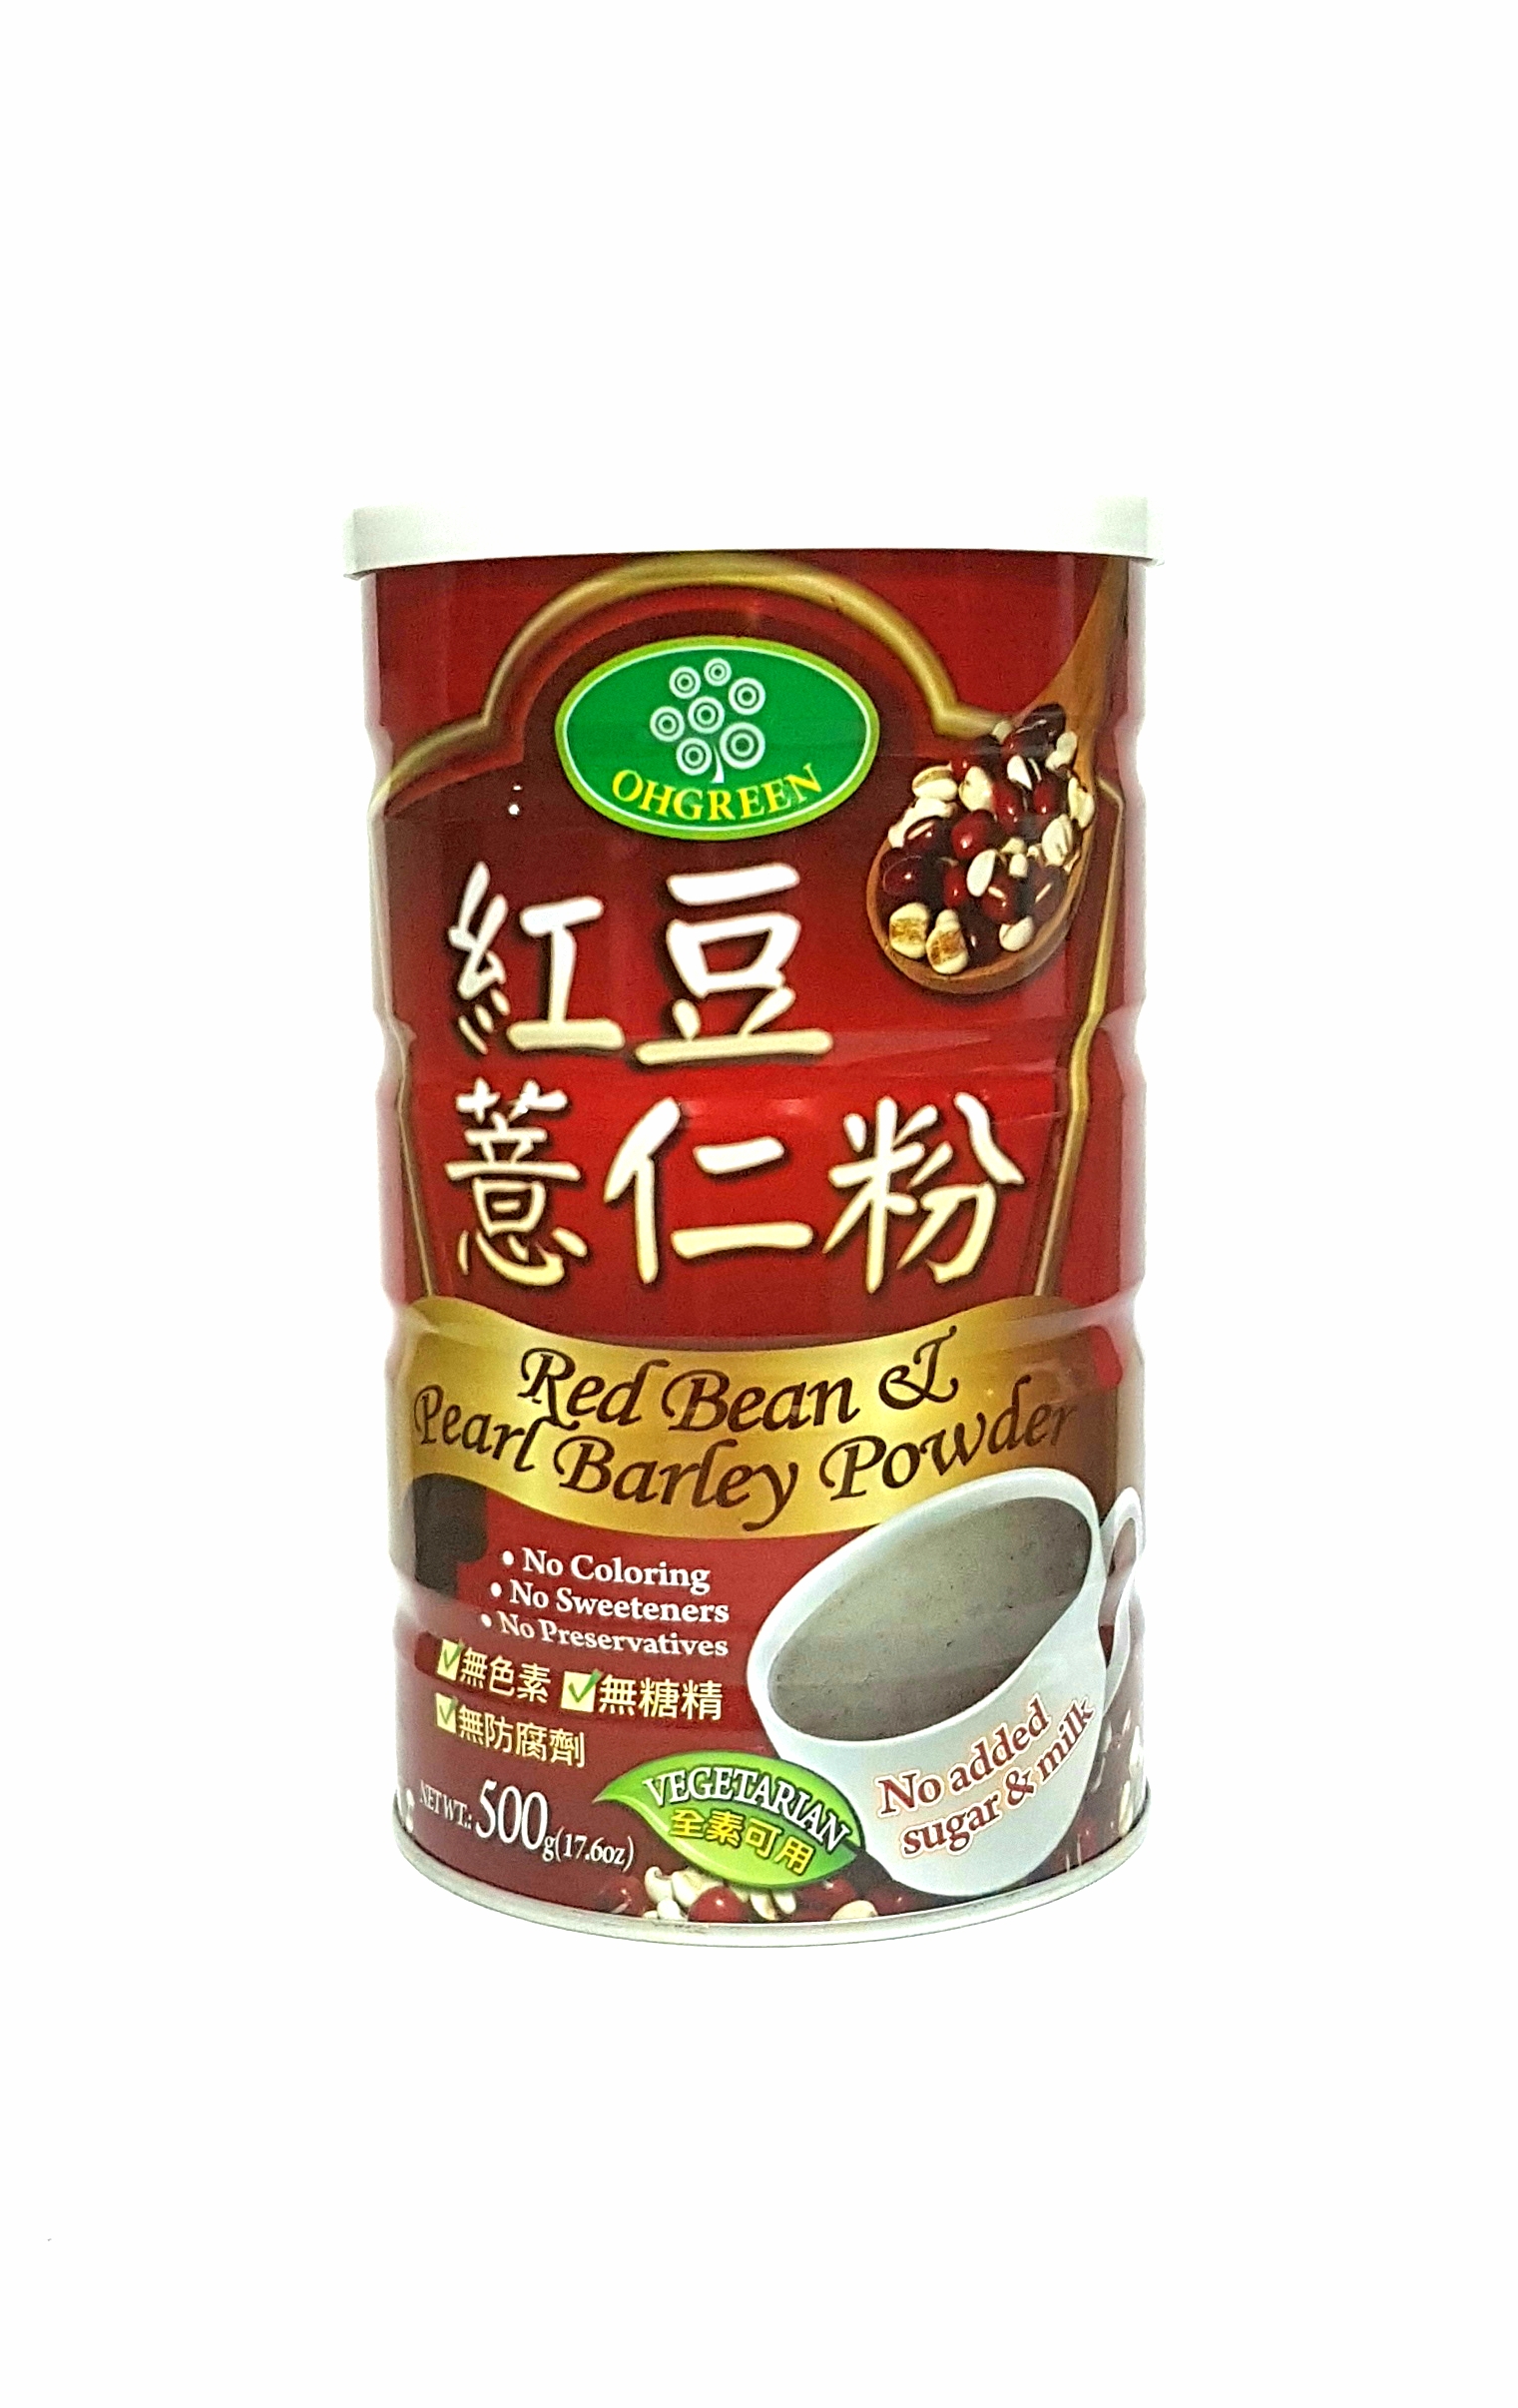 Red Bean amp Pearl Barley Powder 500g Organic and Nature Chain